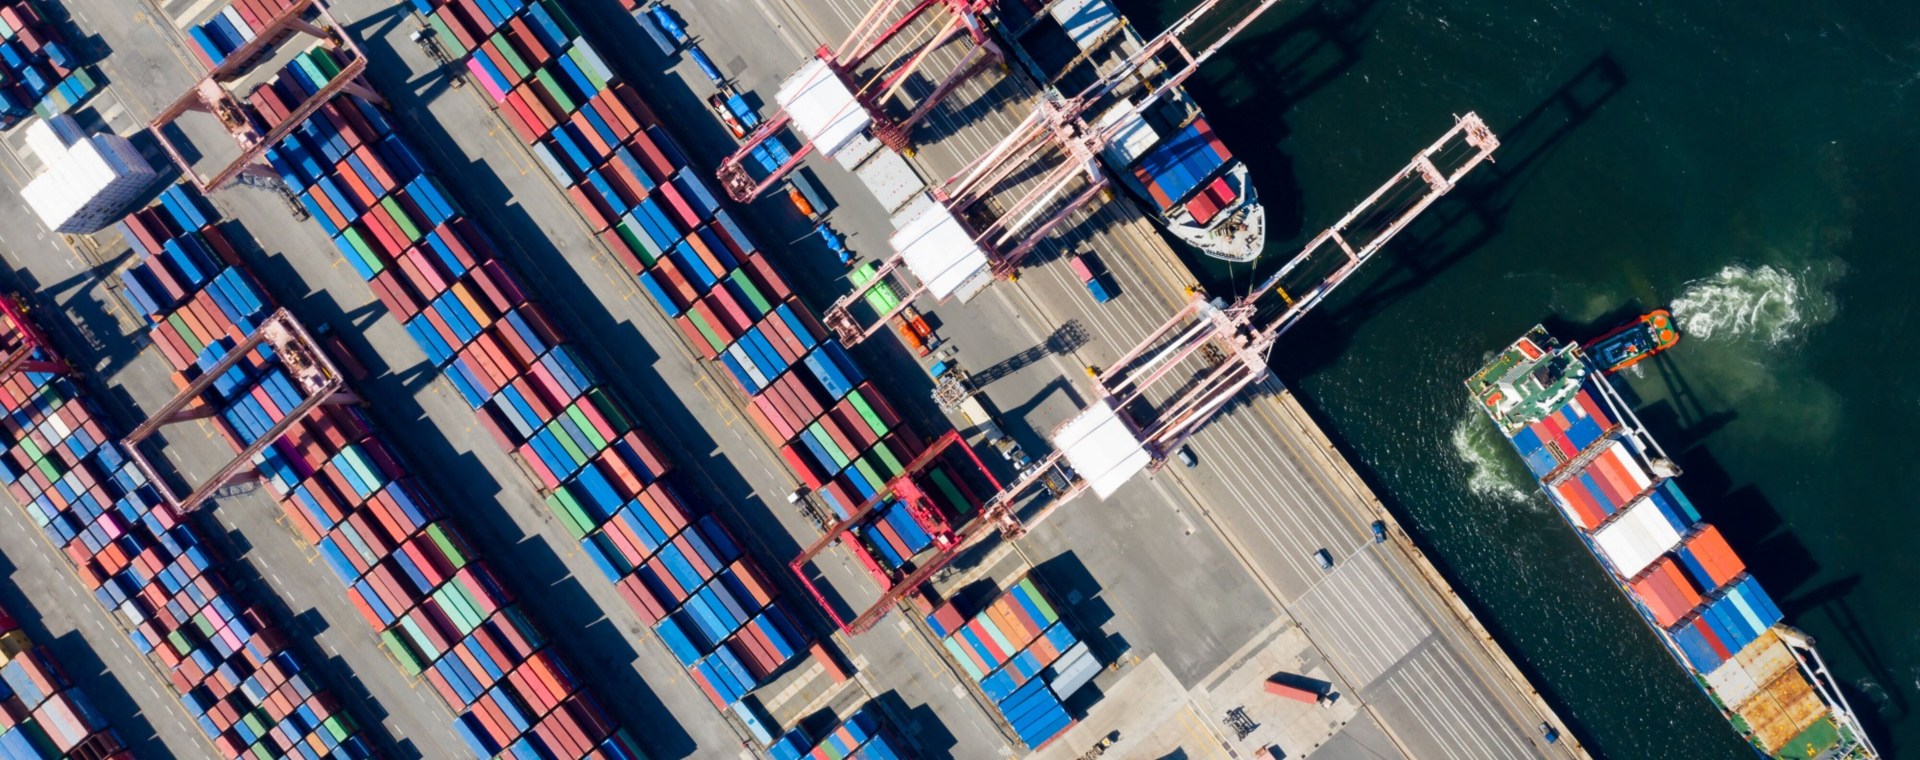 Deretan kontainer warna-warni di Pelabuhan Busan, Korea Selatan - Bloomberg/SeongJoon Cho